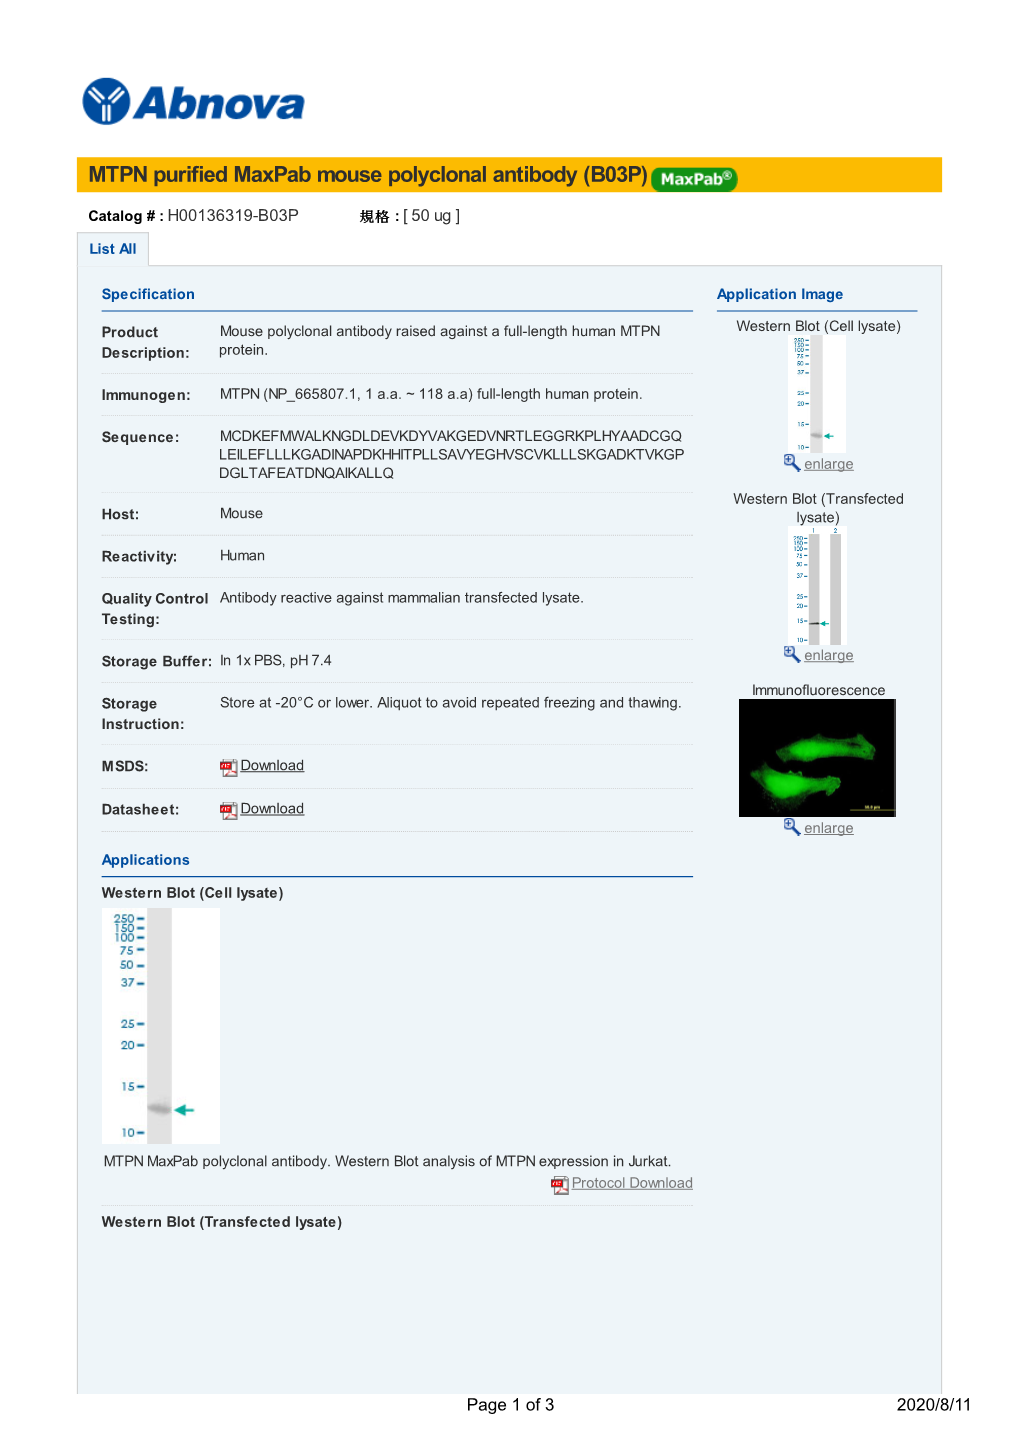 MTPN Purified Maxpab Mouse Polyclonal Antibody (B03P)